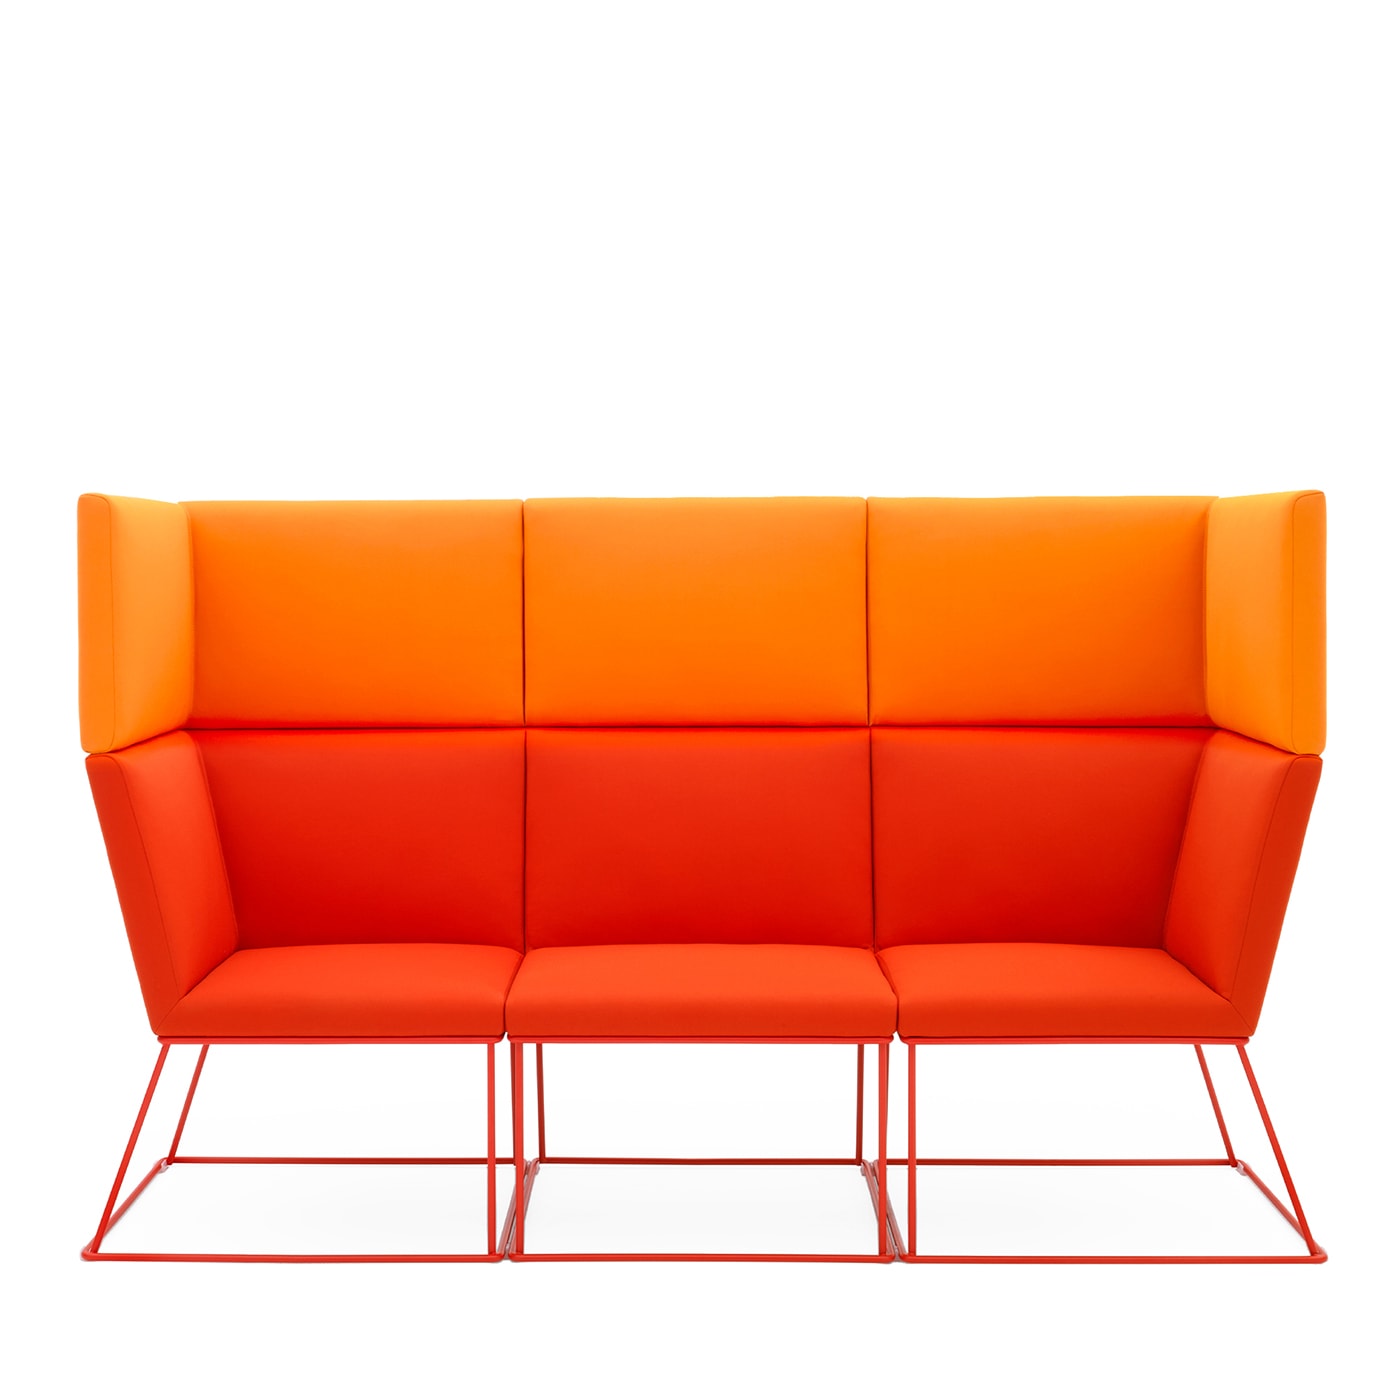 GEORGE modular sofa #2 by Basaglia + Rota Nodari - Viganò & C.